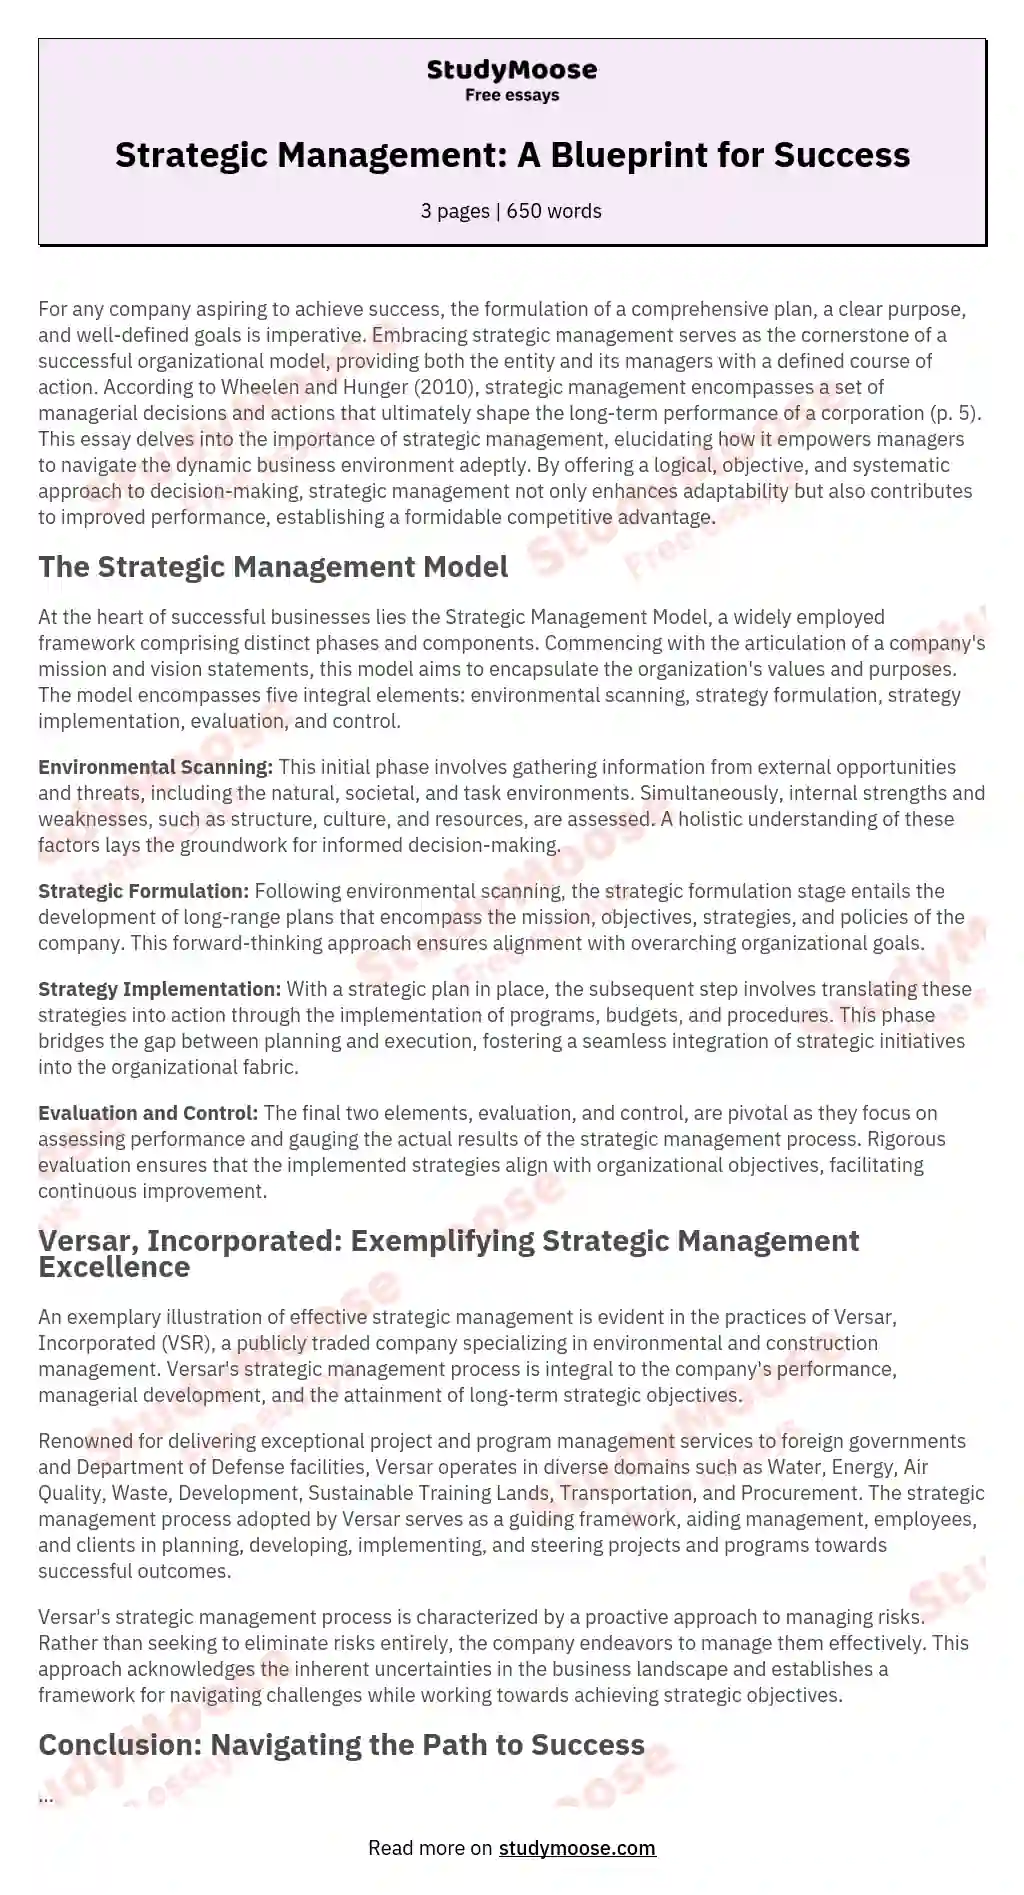 Strategic Management: A Blueprint for Success essay